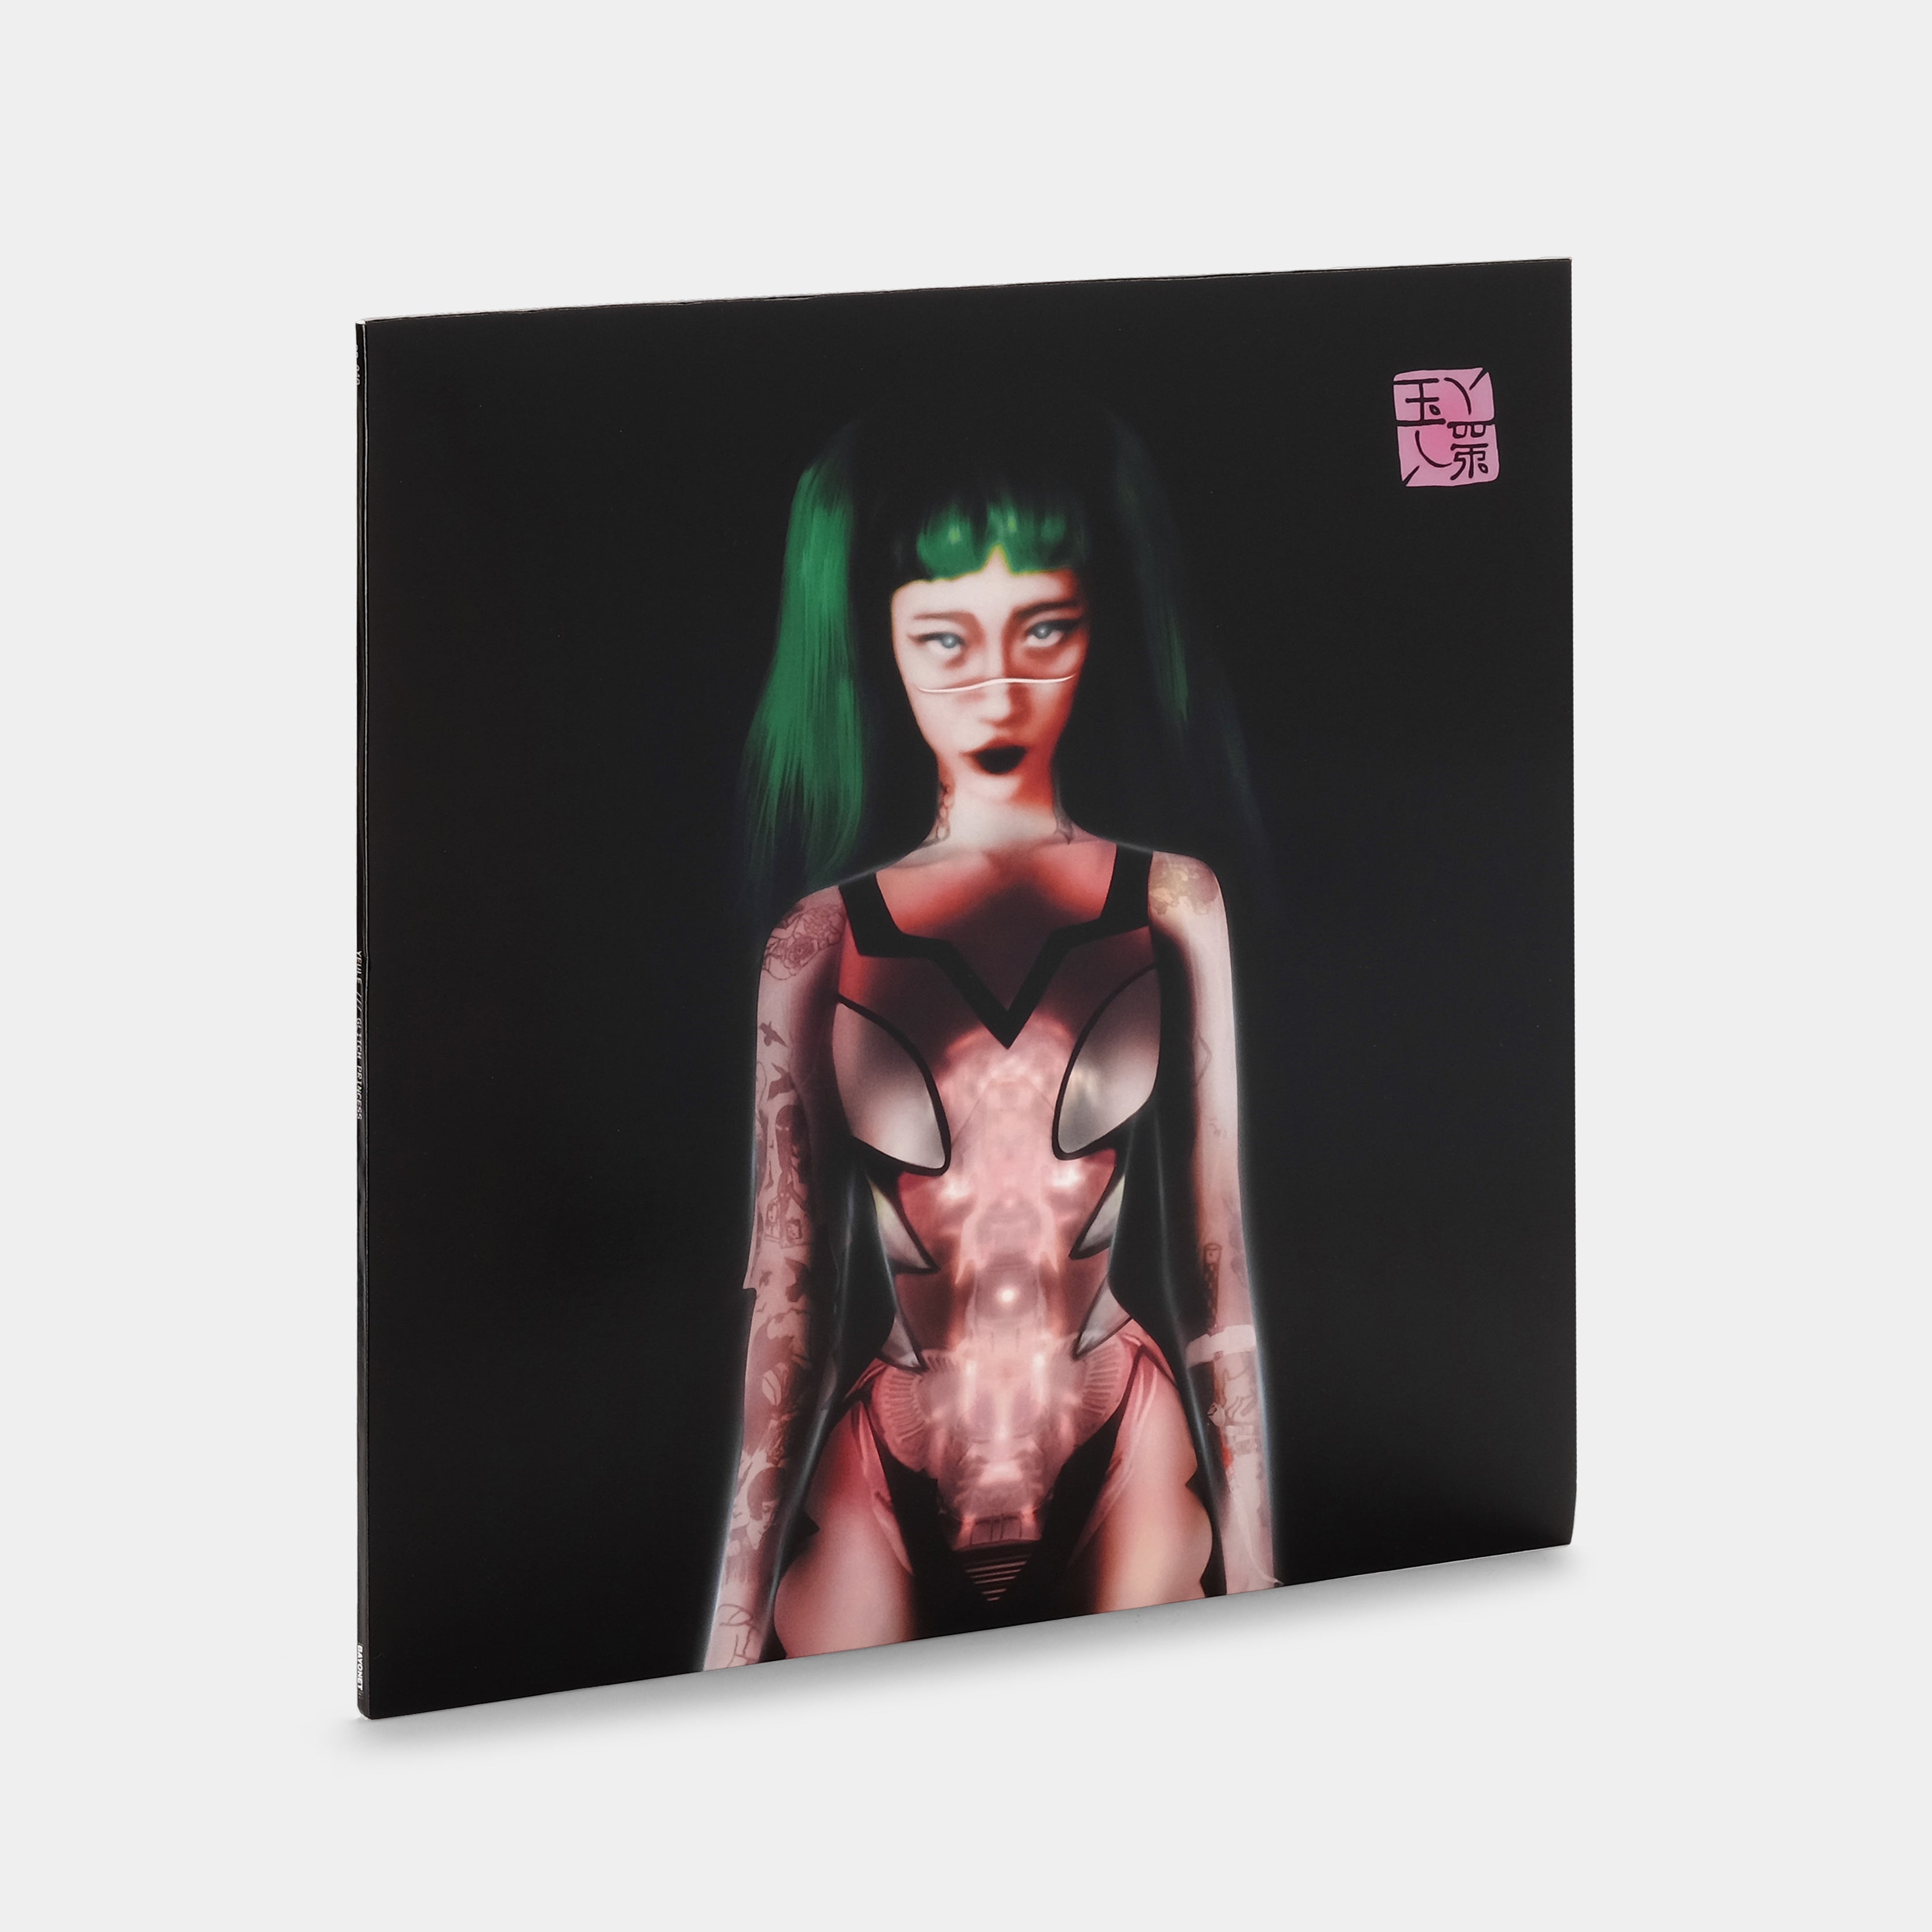 yeule - Glitch Princess LP Antifreeze Green Vinyl Record